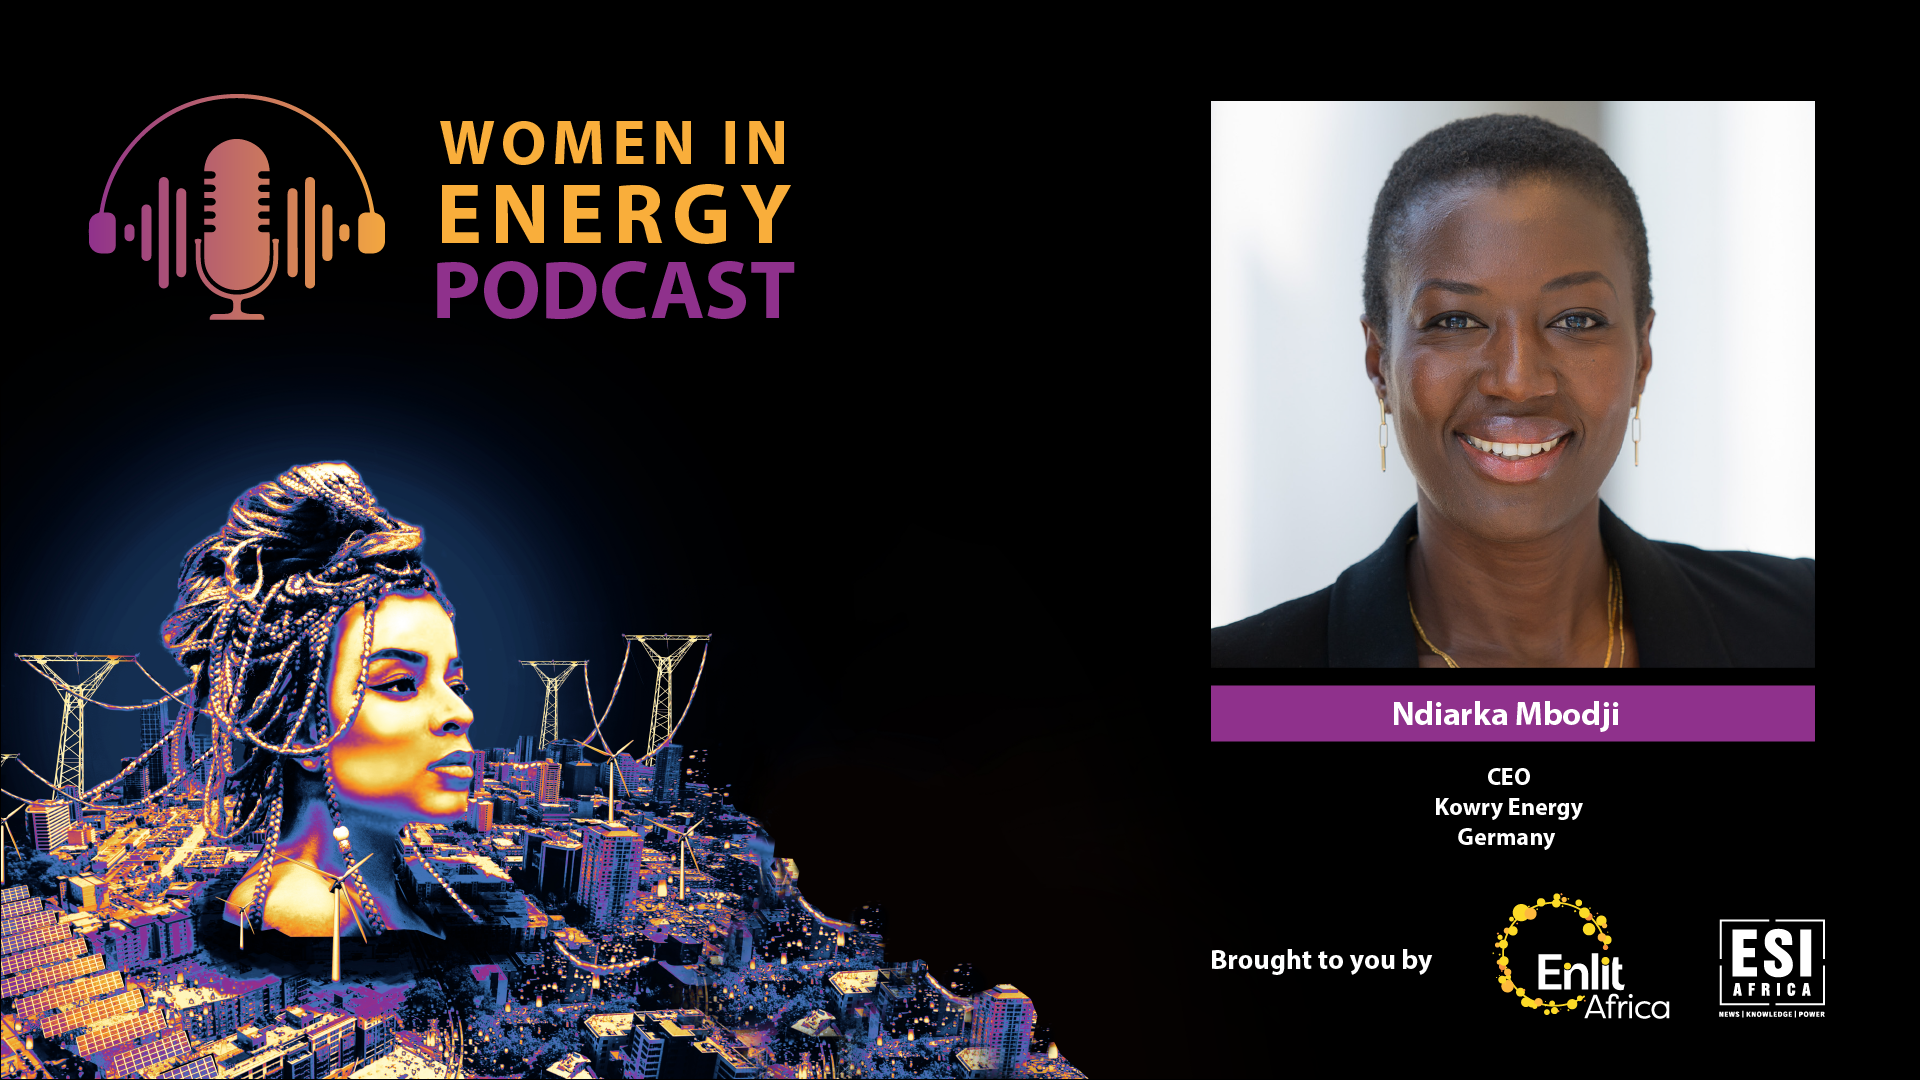 Women in Energy: An interview with Ndiarka Mbodji